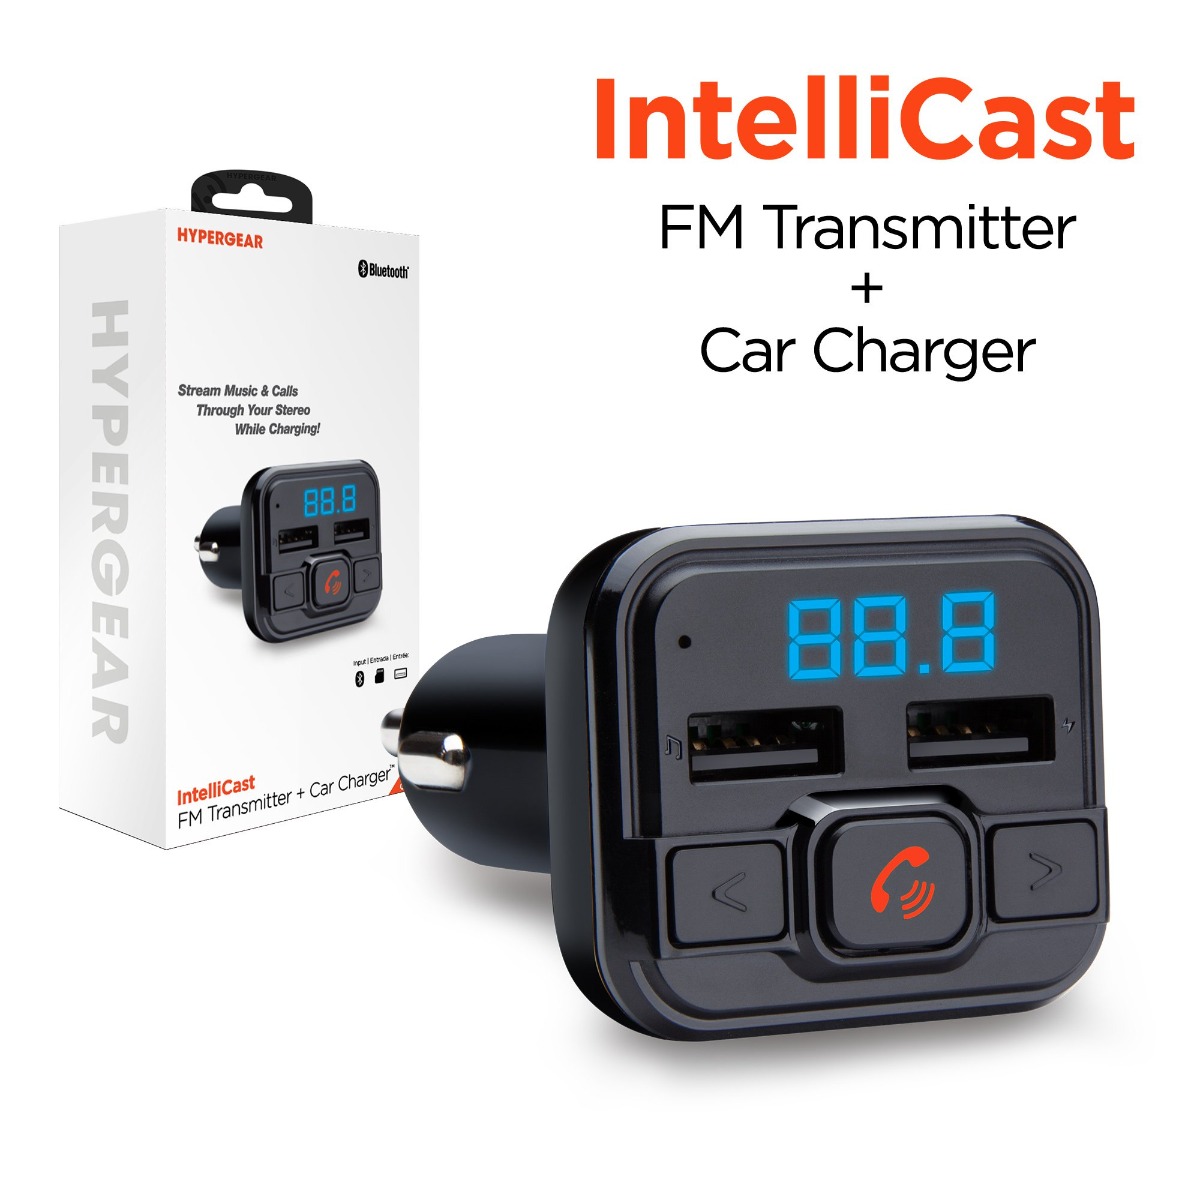 HyperGear IntelliCast FM Transmitter + Car Charger